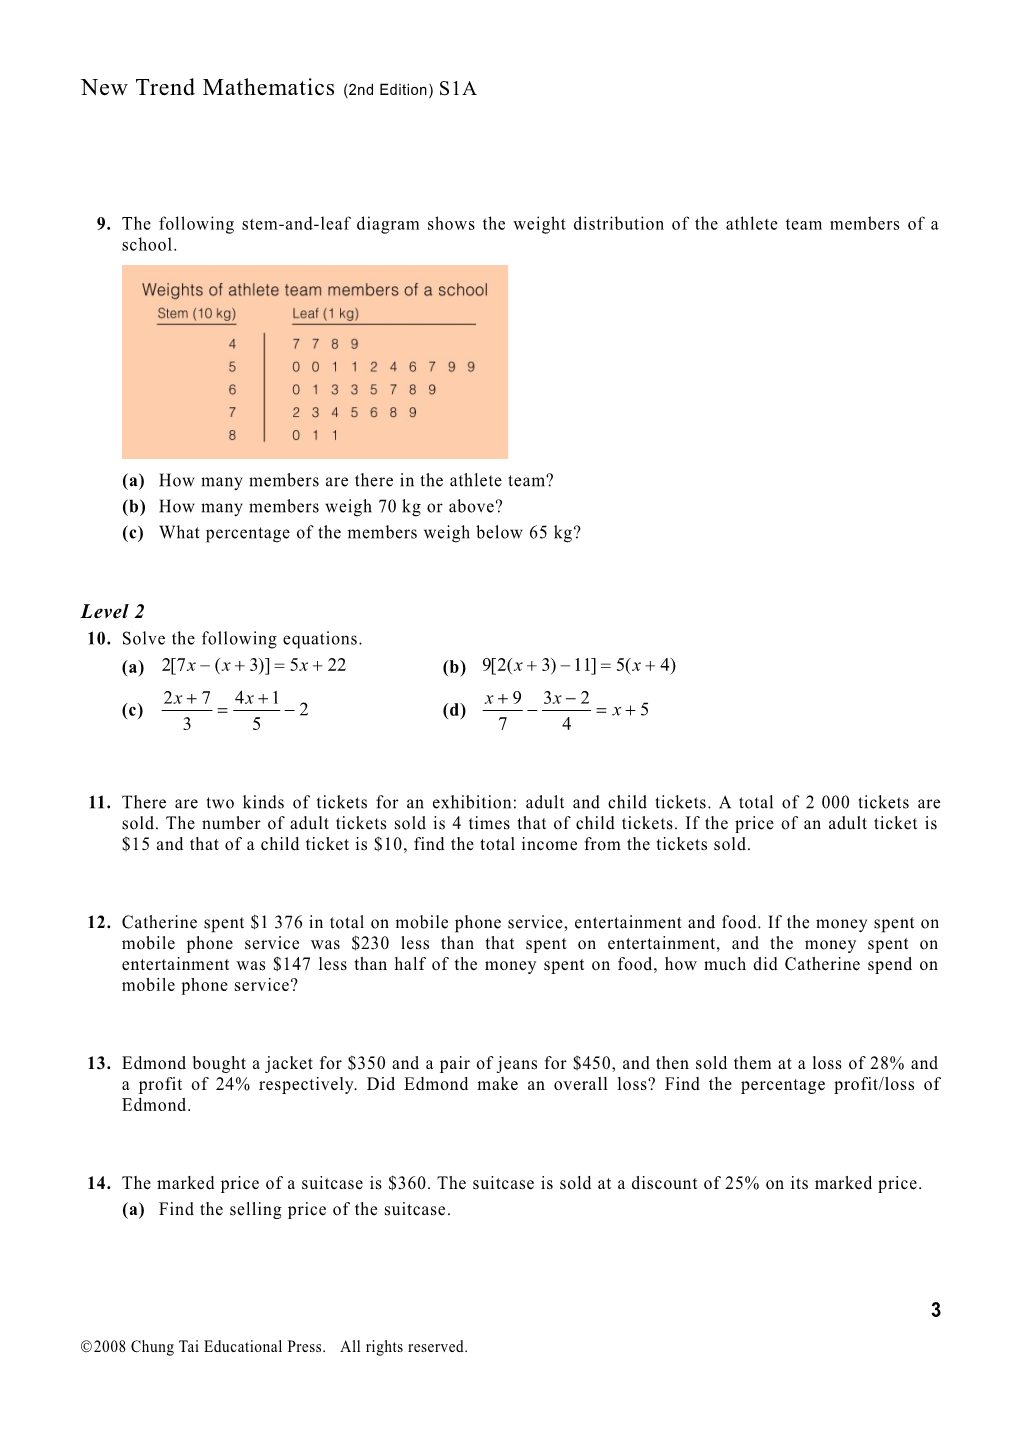 New Trend Mathematics(2Nd Edition)S1A